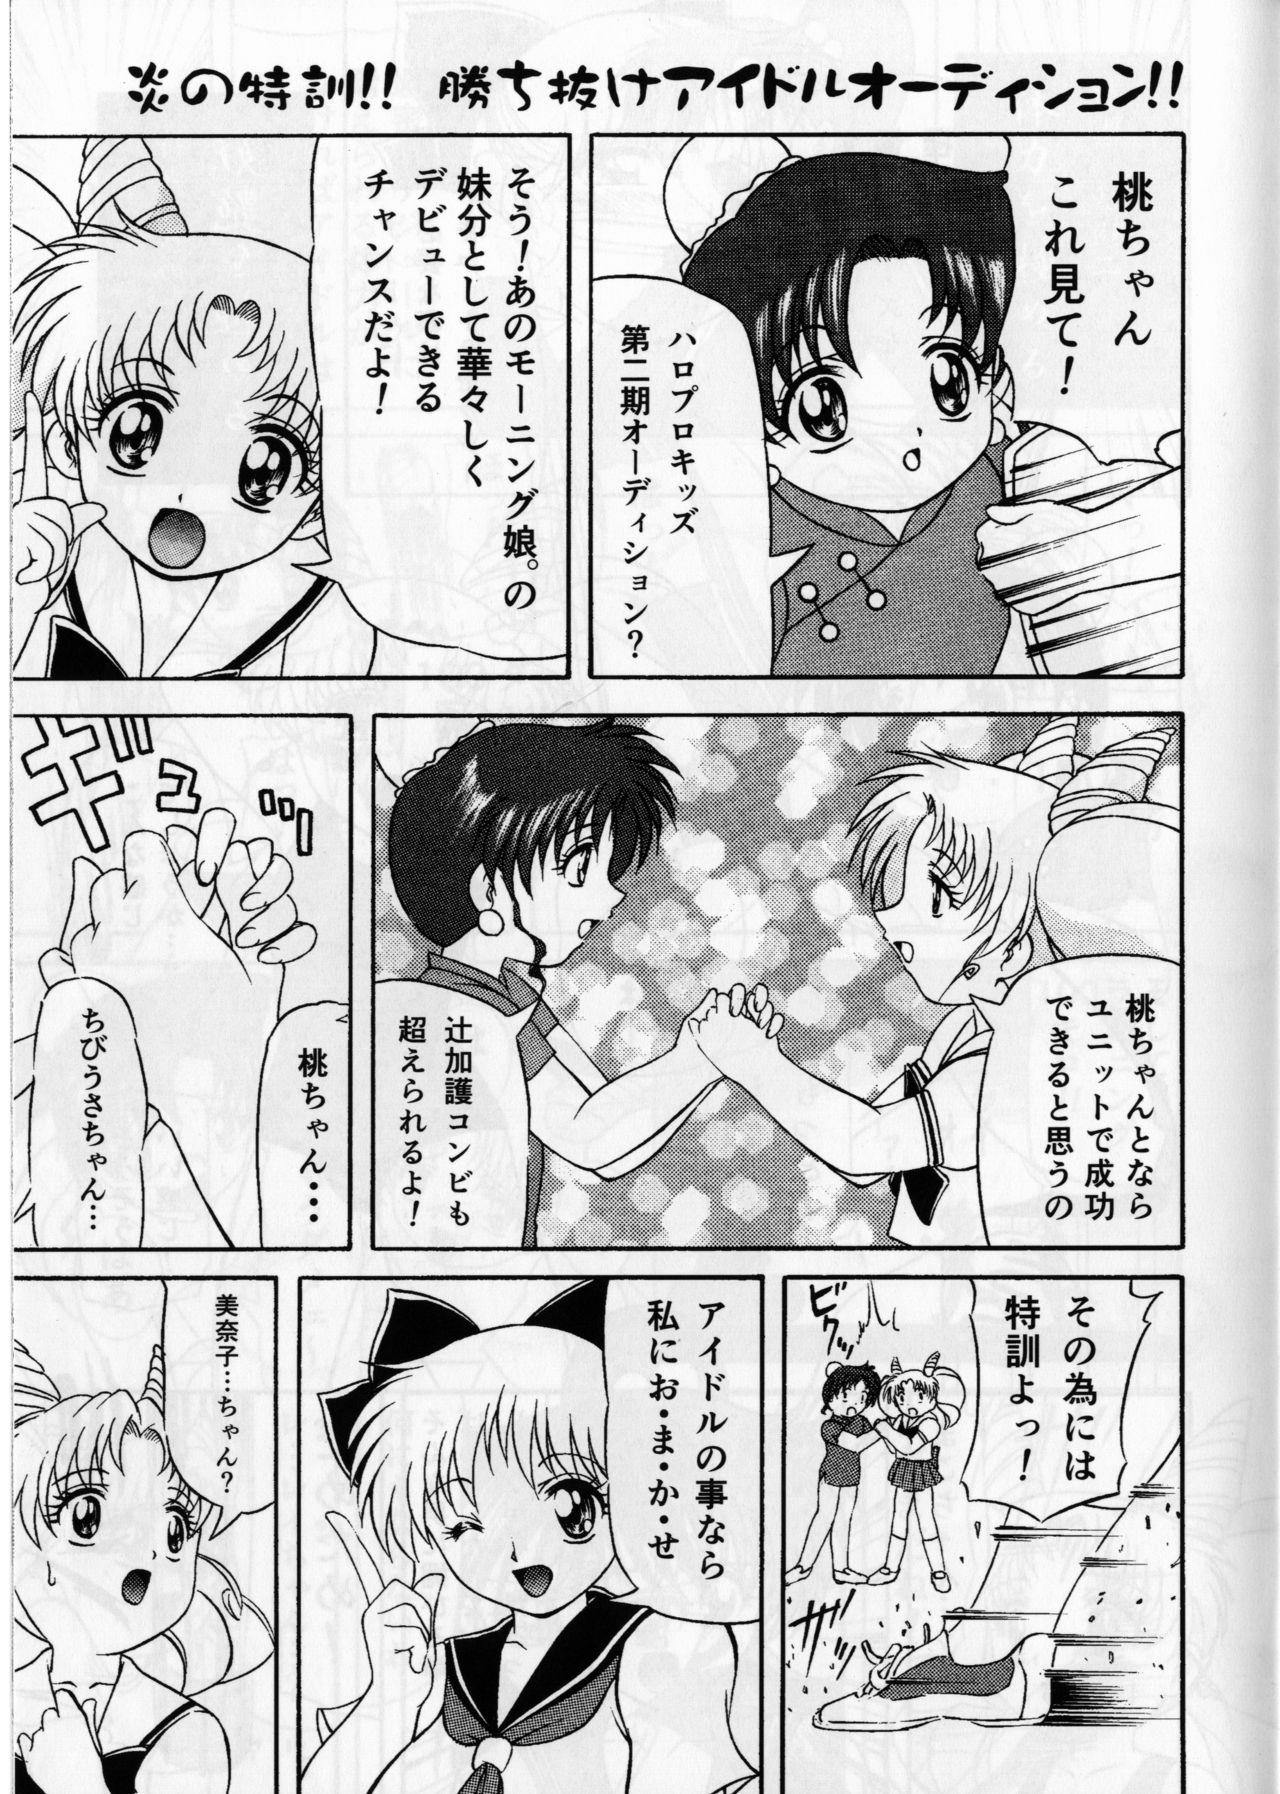 Hardsex Pink Sugar 20th Anniversary Special - Sailor moon Blacksonboys - Page 7